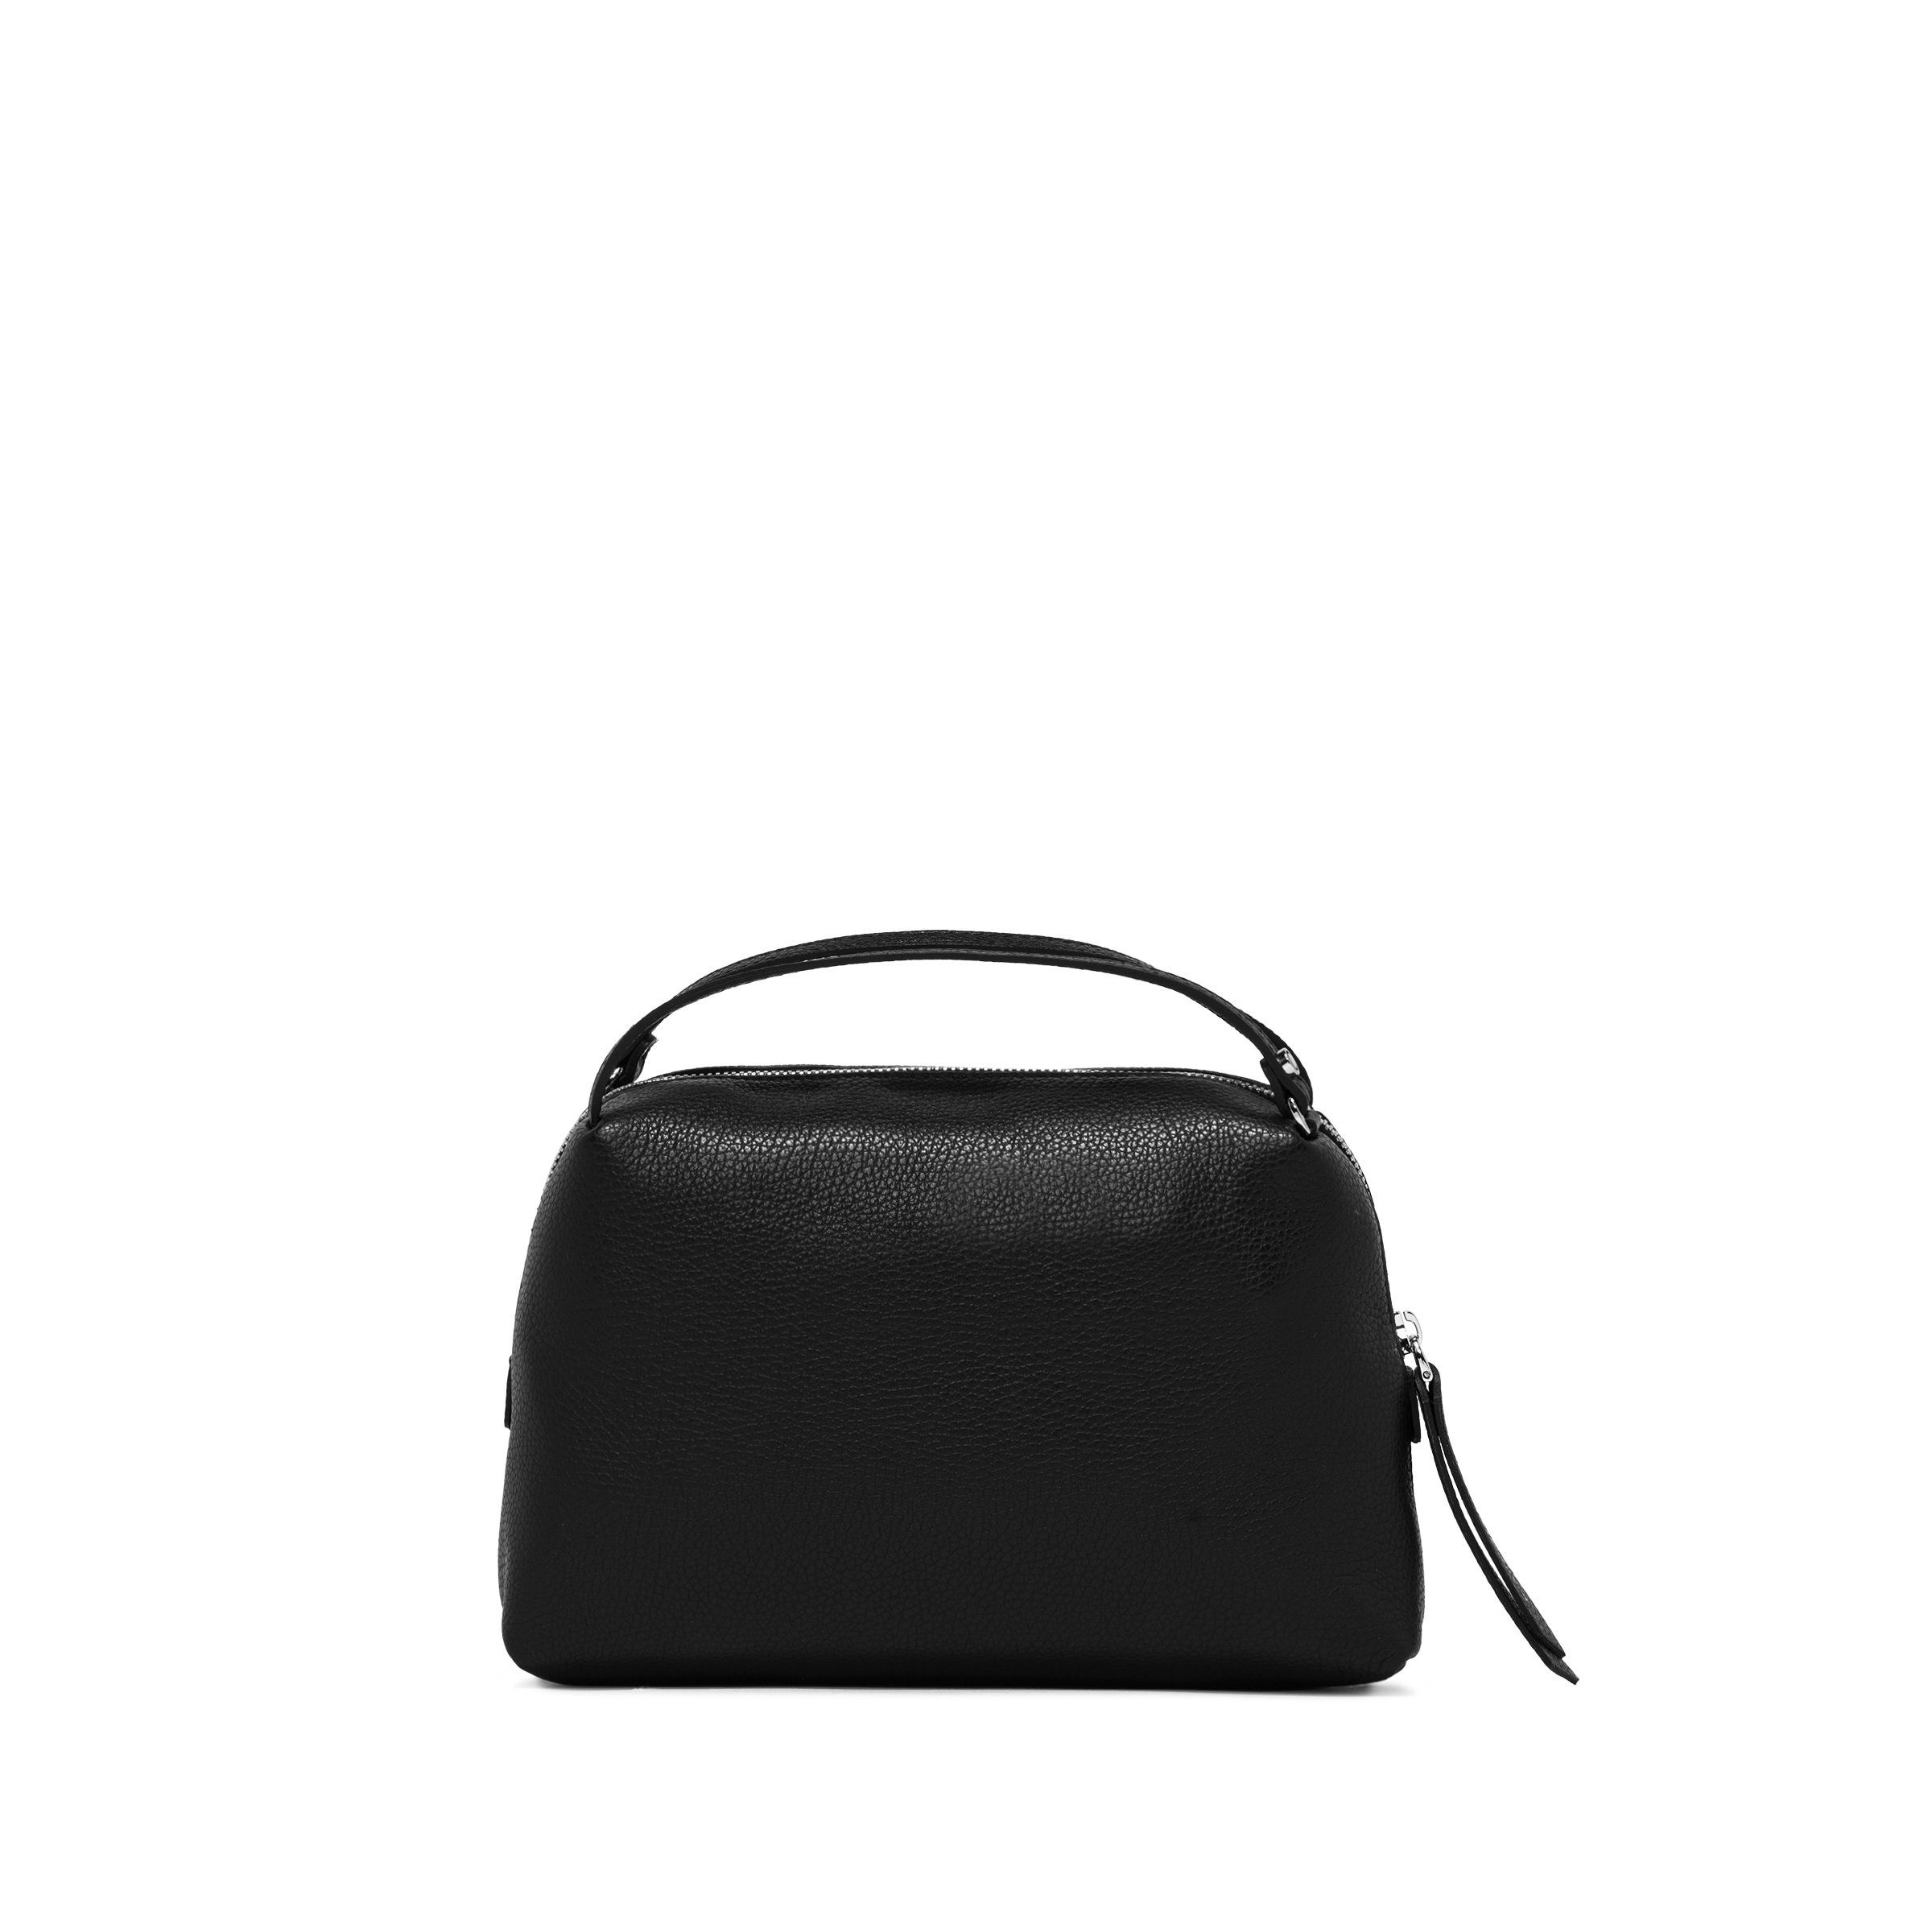 Gianni Chiarini - Alifa bag in leather, Black, large image number 1